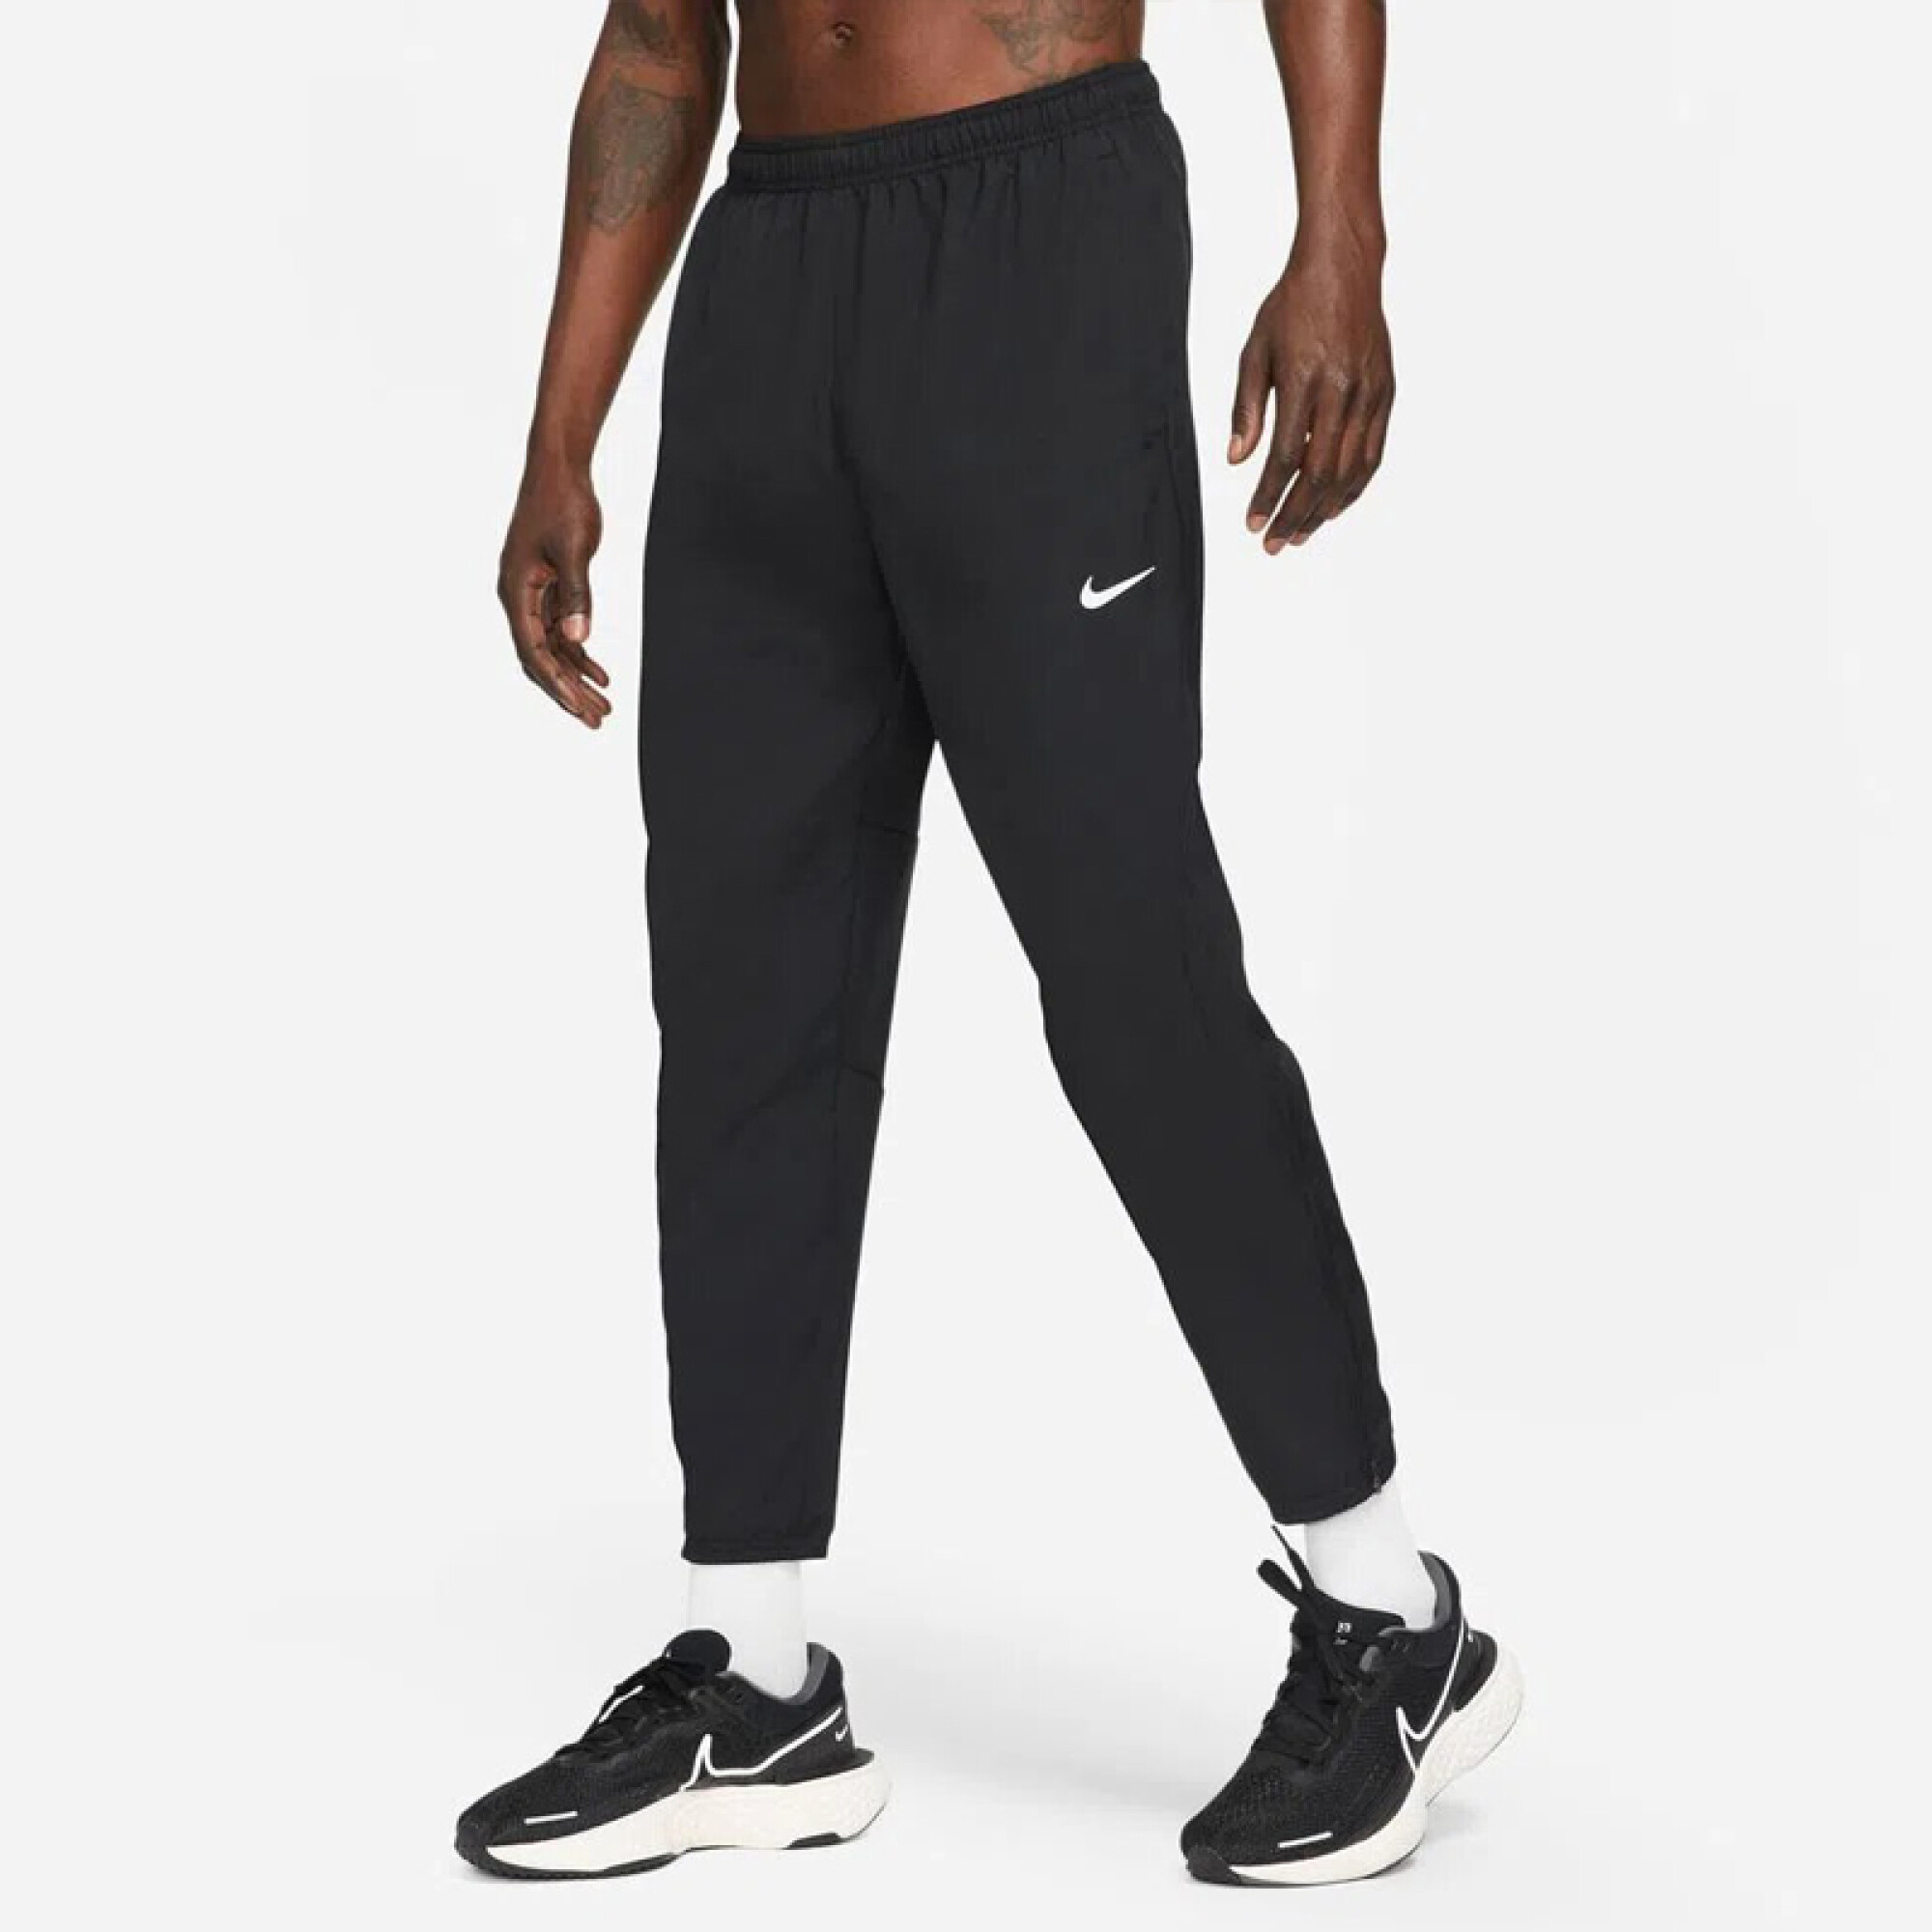 Pantalon Nike Dri-fit Challenger Hombre La Cancha